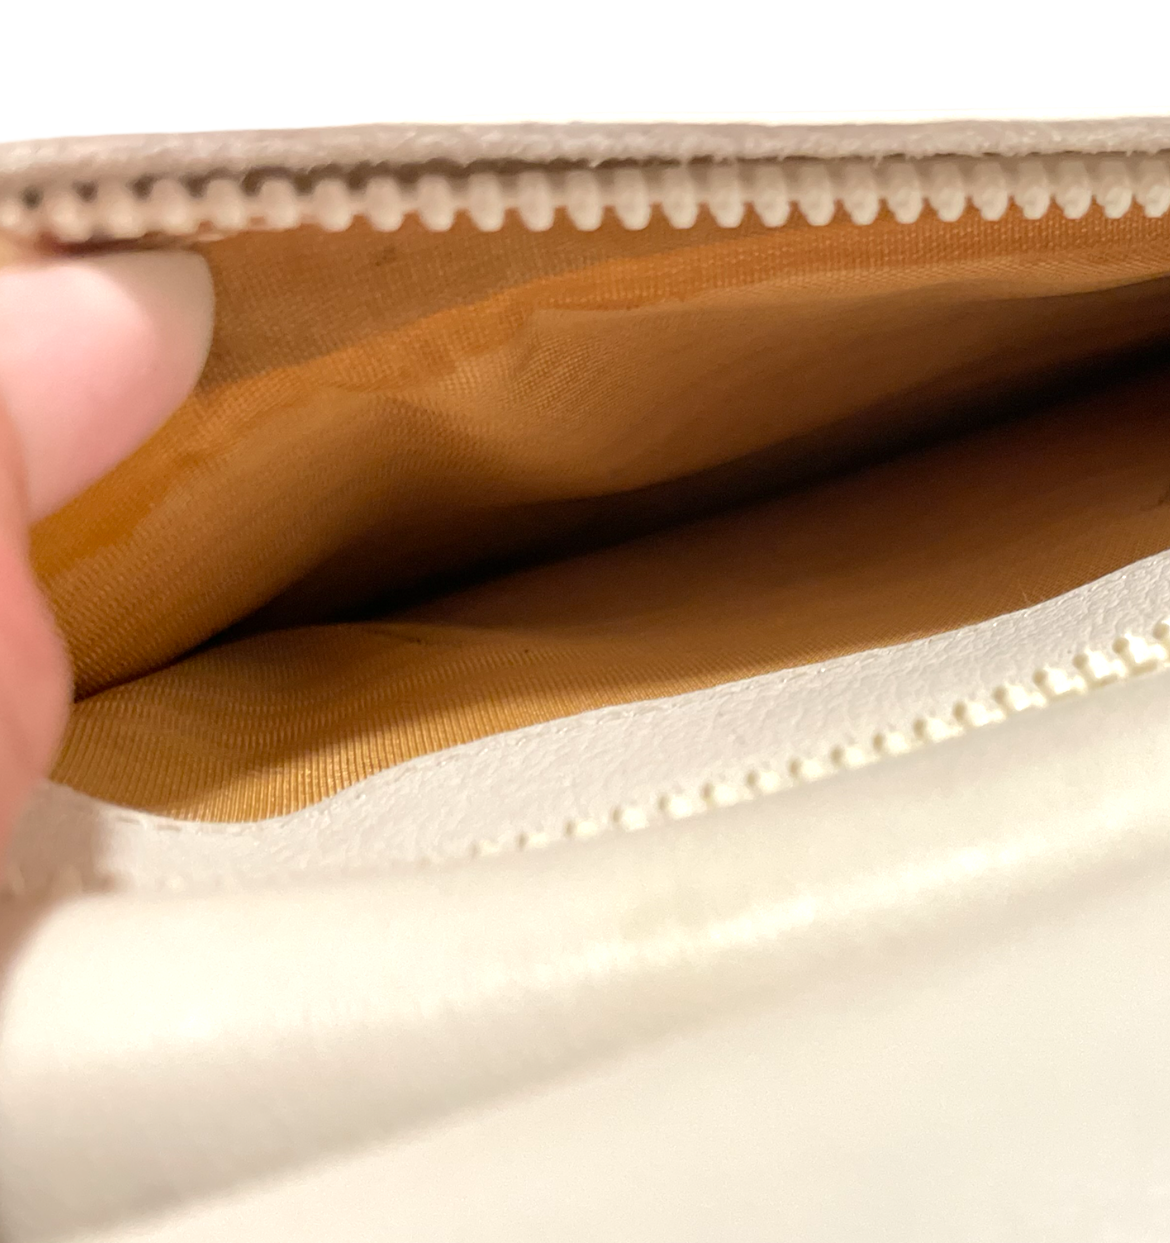 GUCCI Vintage Leather Clutch/Shoulder/Sling Bag with Horse Bit Motif Web Accent